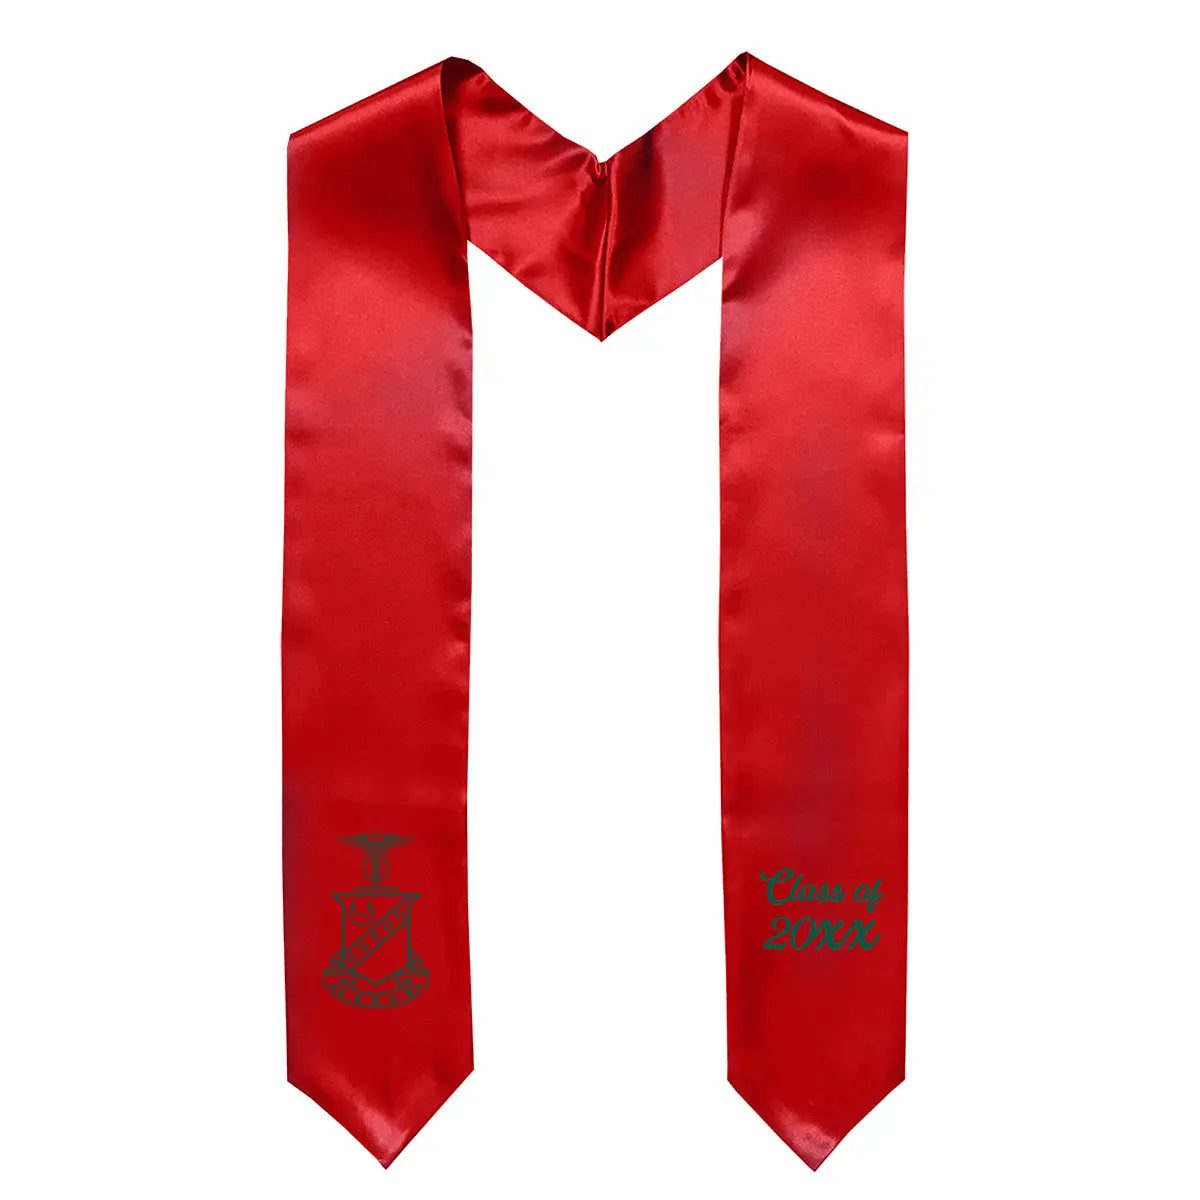 Kappa Sig Embroidered Crest Graduation Stole